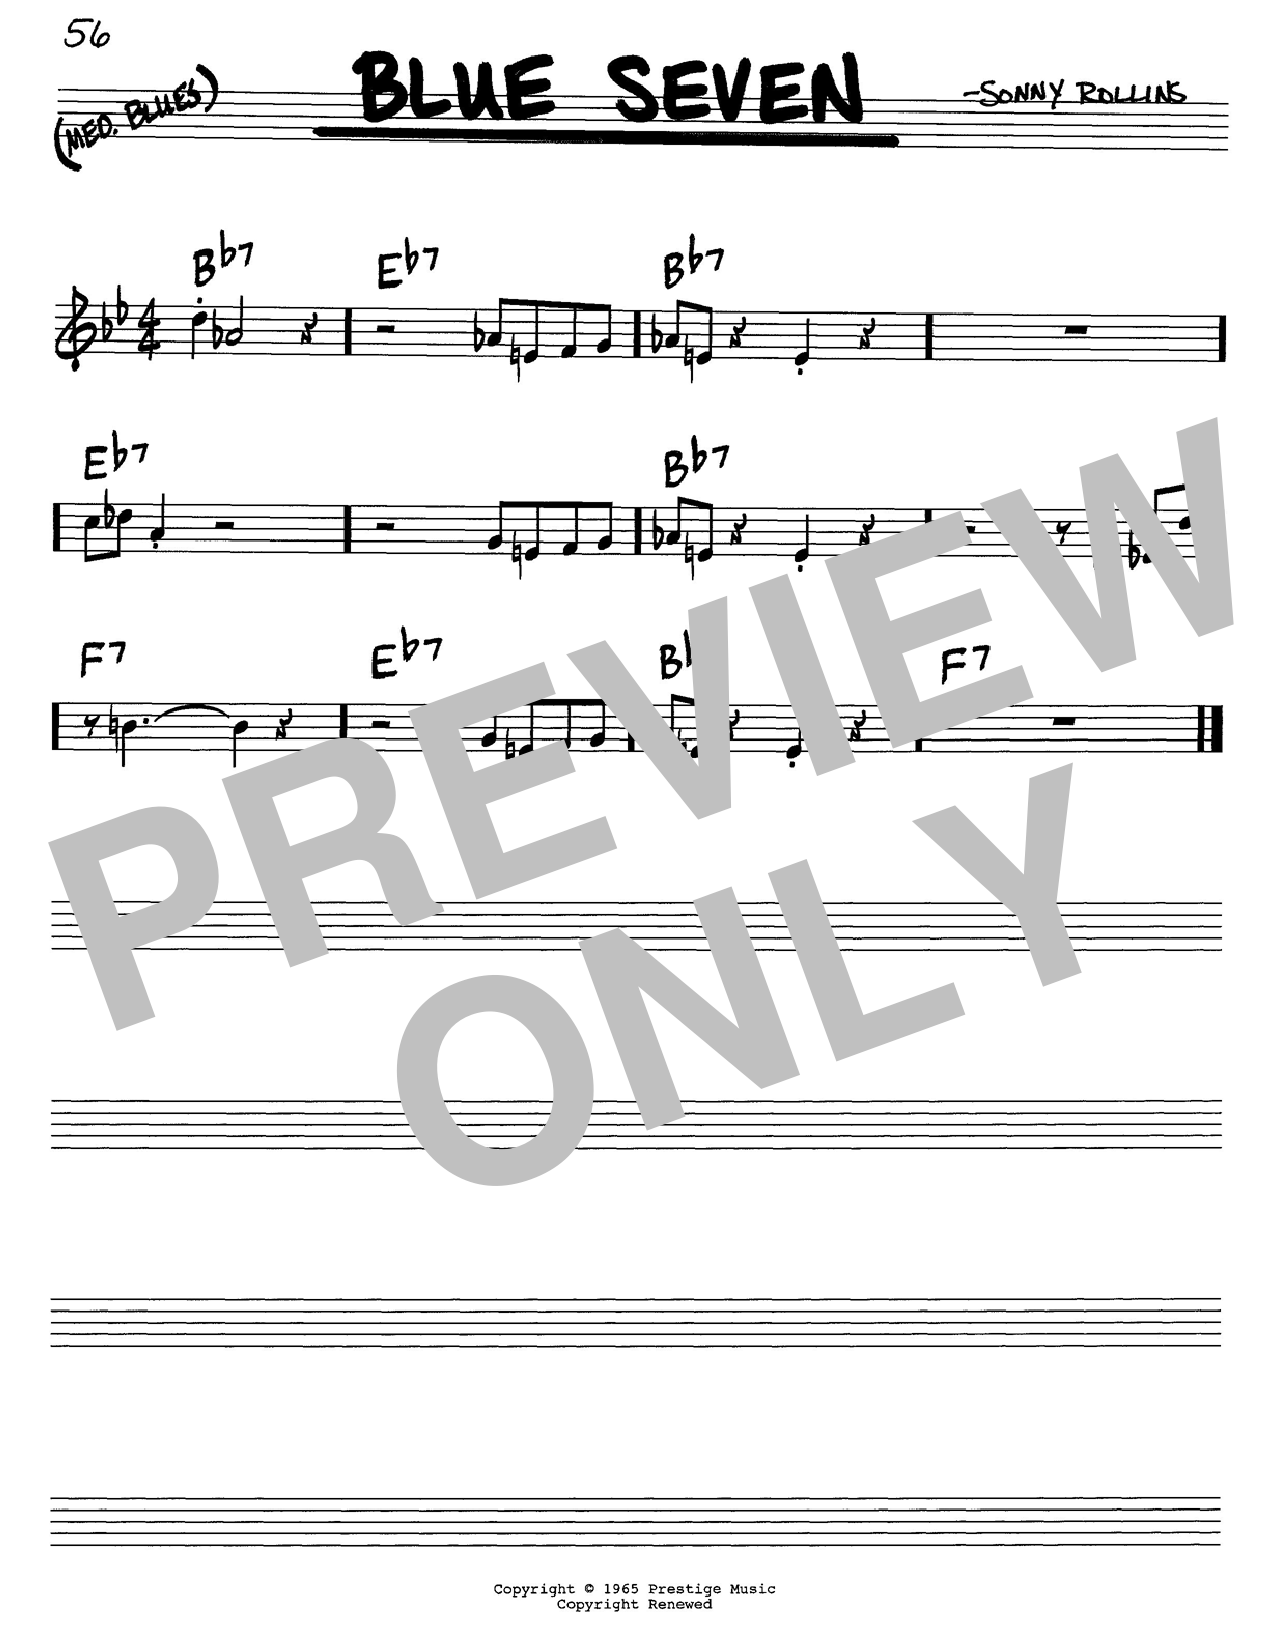 Arqueológico calcio Intacto Sonny Rollins "Blue Seven" Sheet Music Notes | Download Printable PDF Score  60077